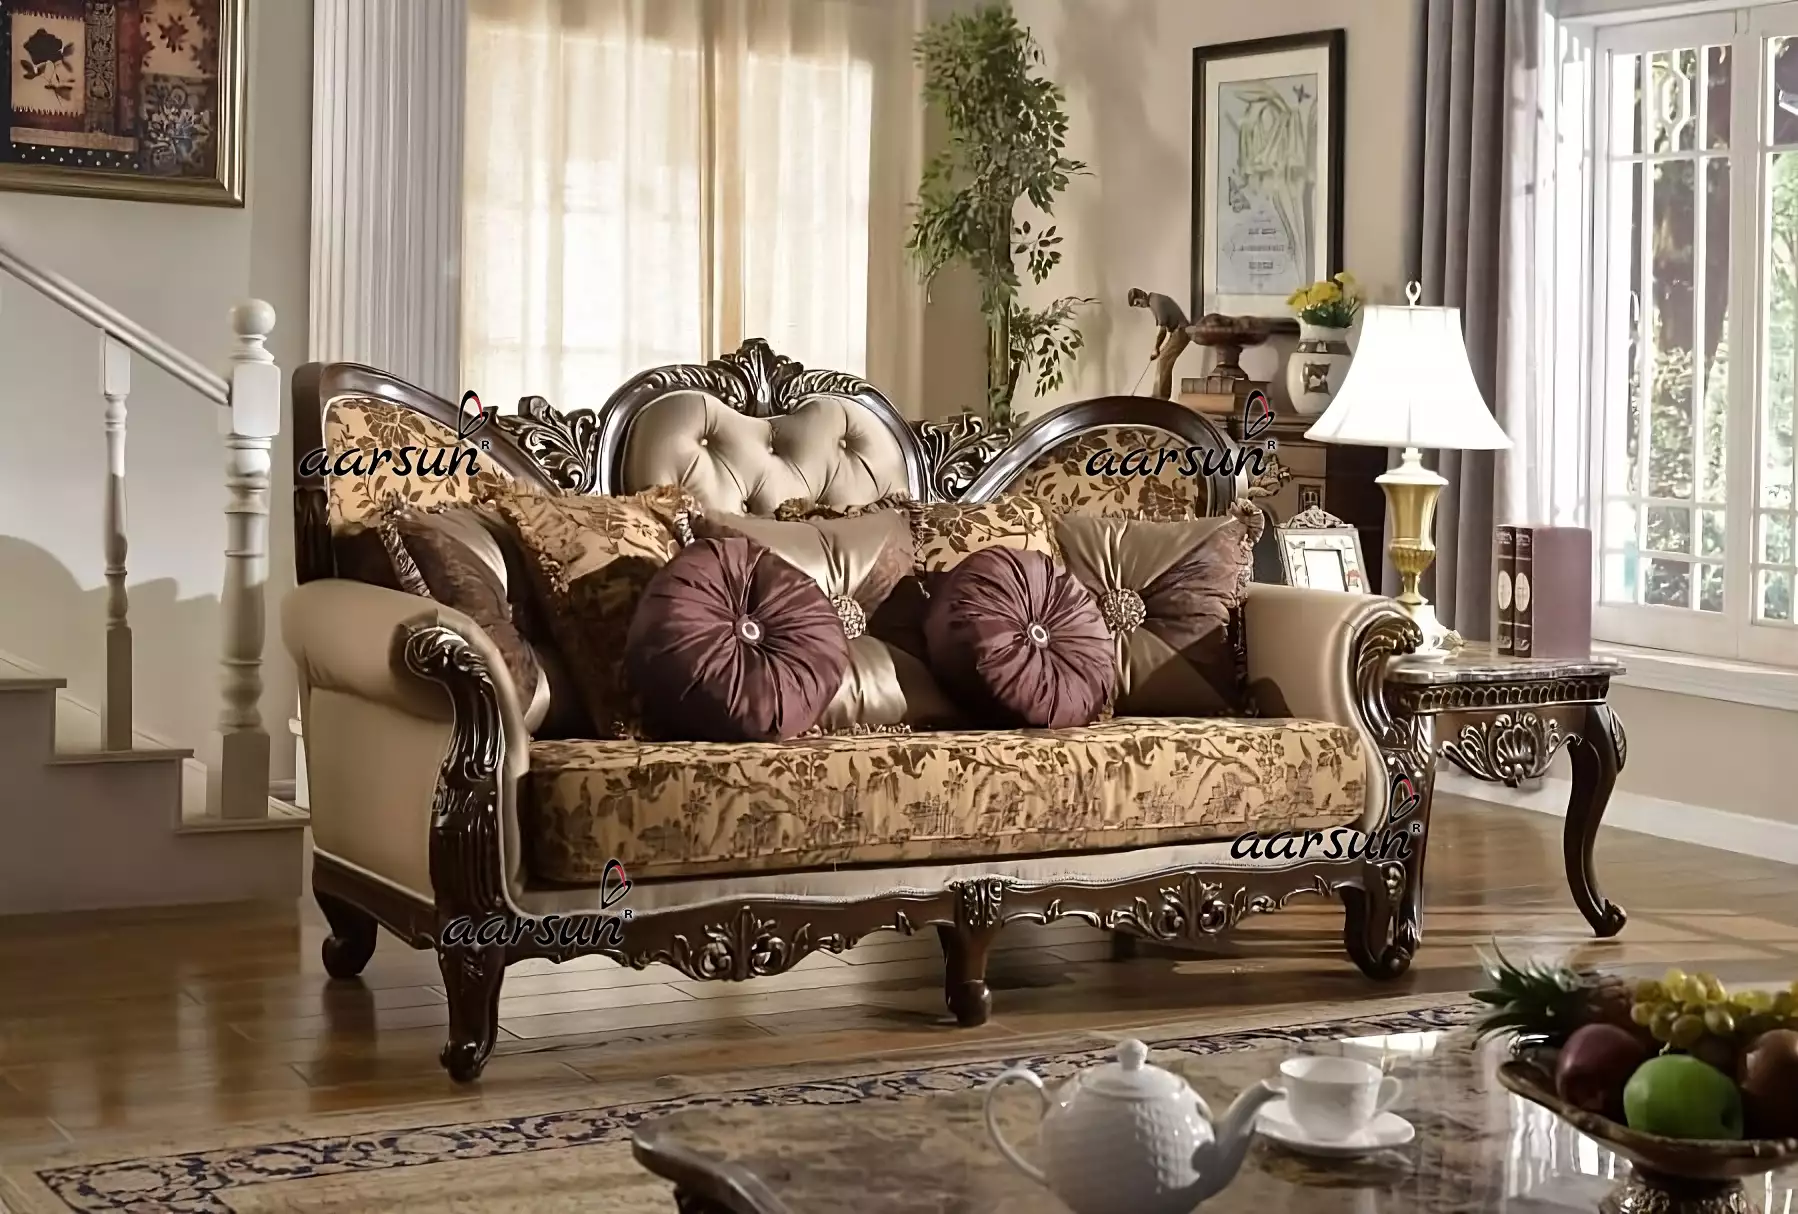 Aarsun Royal Sofa for Living Room in Dark Wood Finish